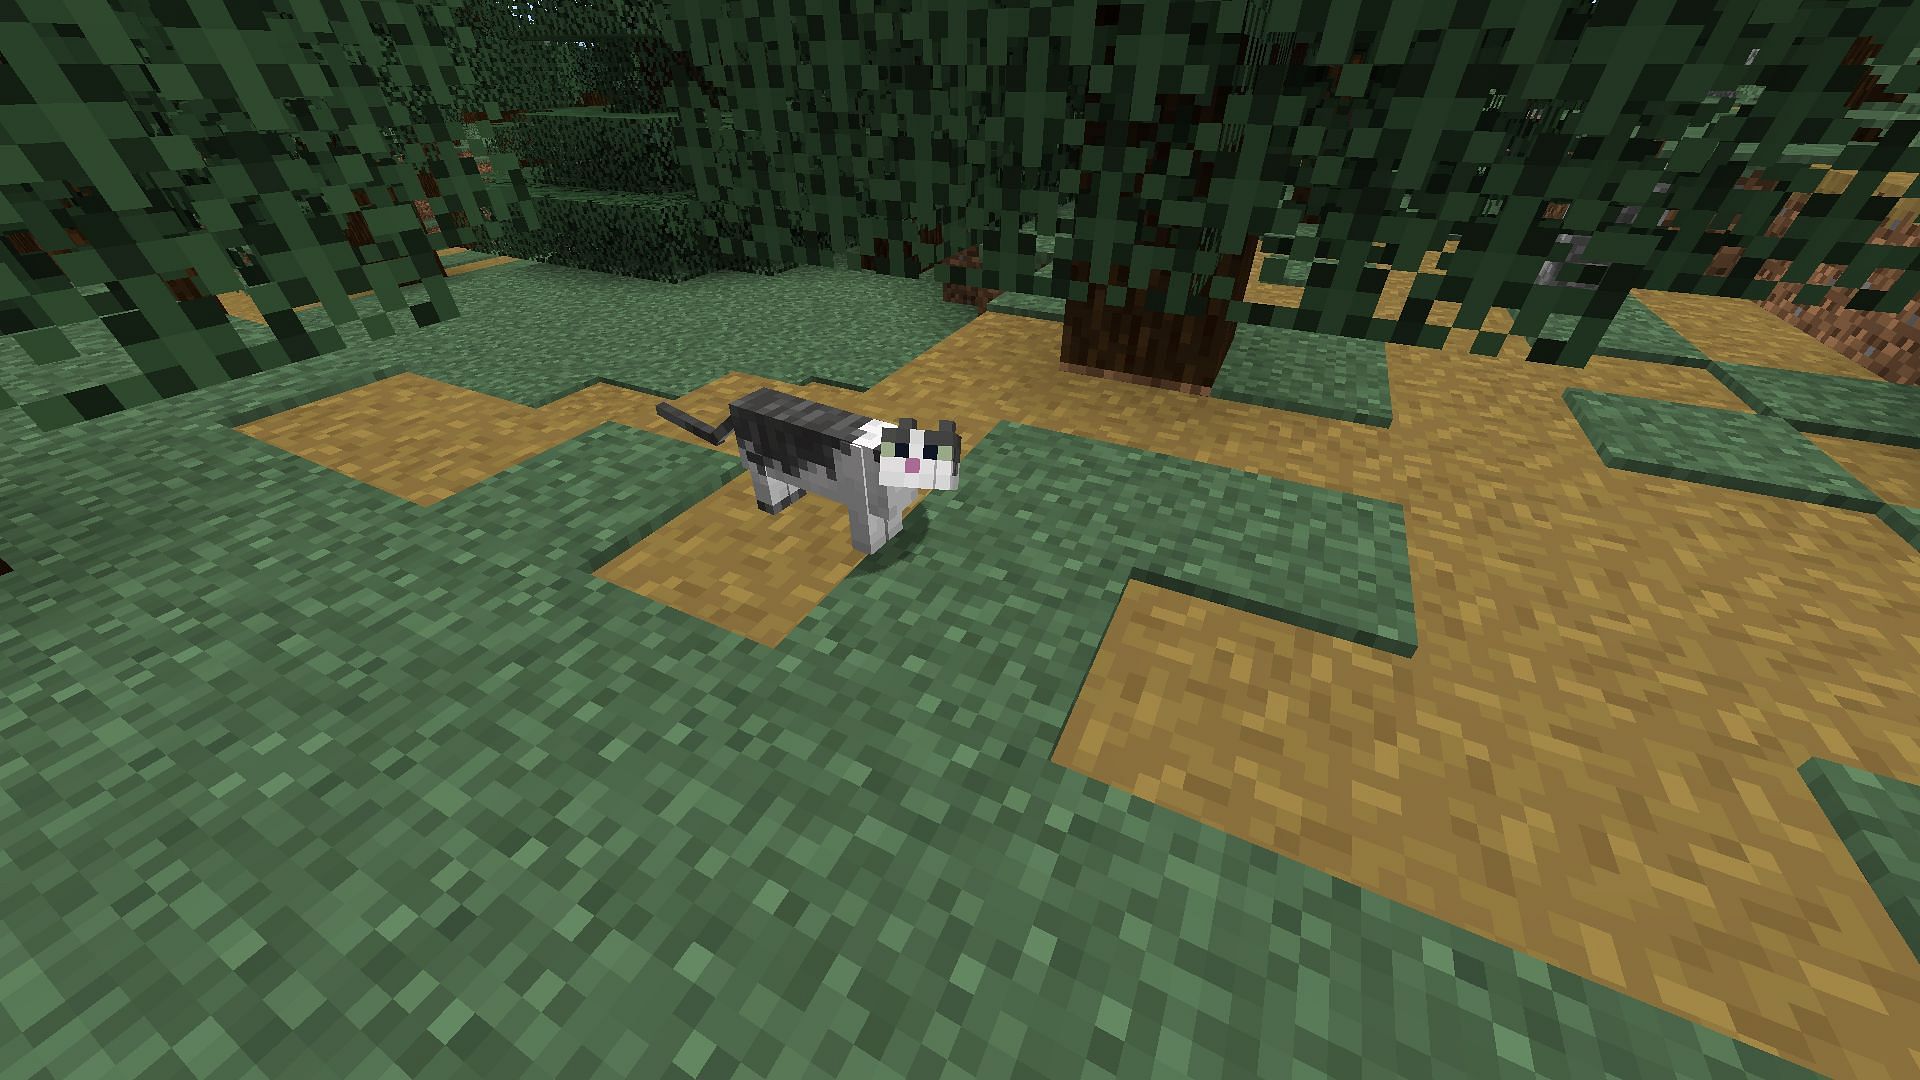 Cat in Minecraft (Image via Mojang)